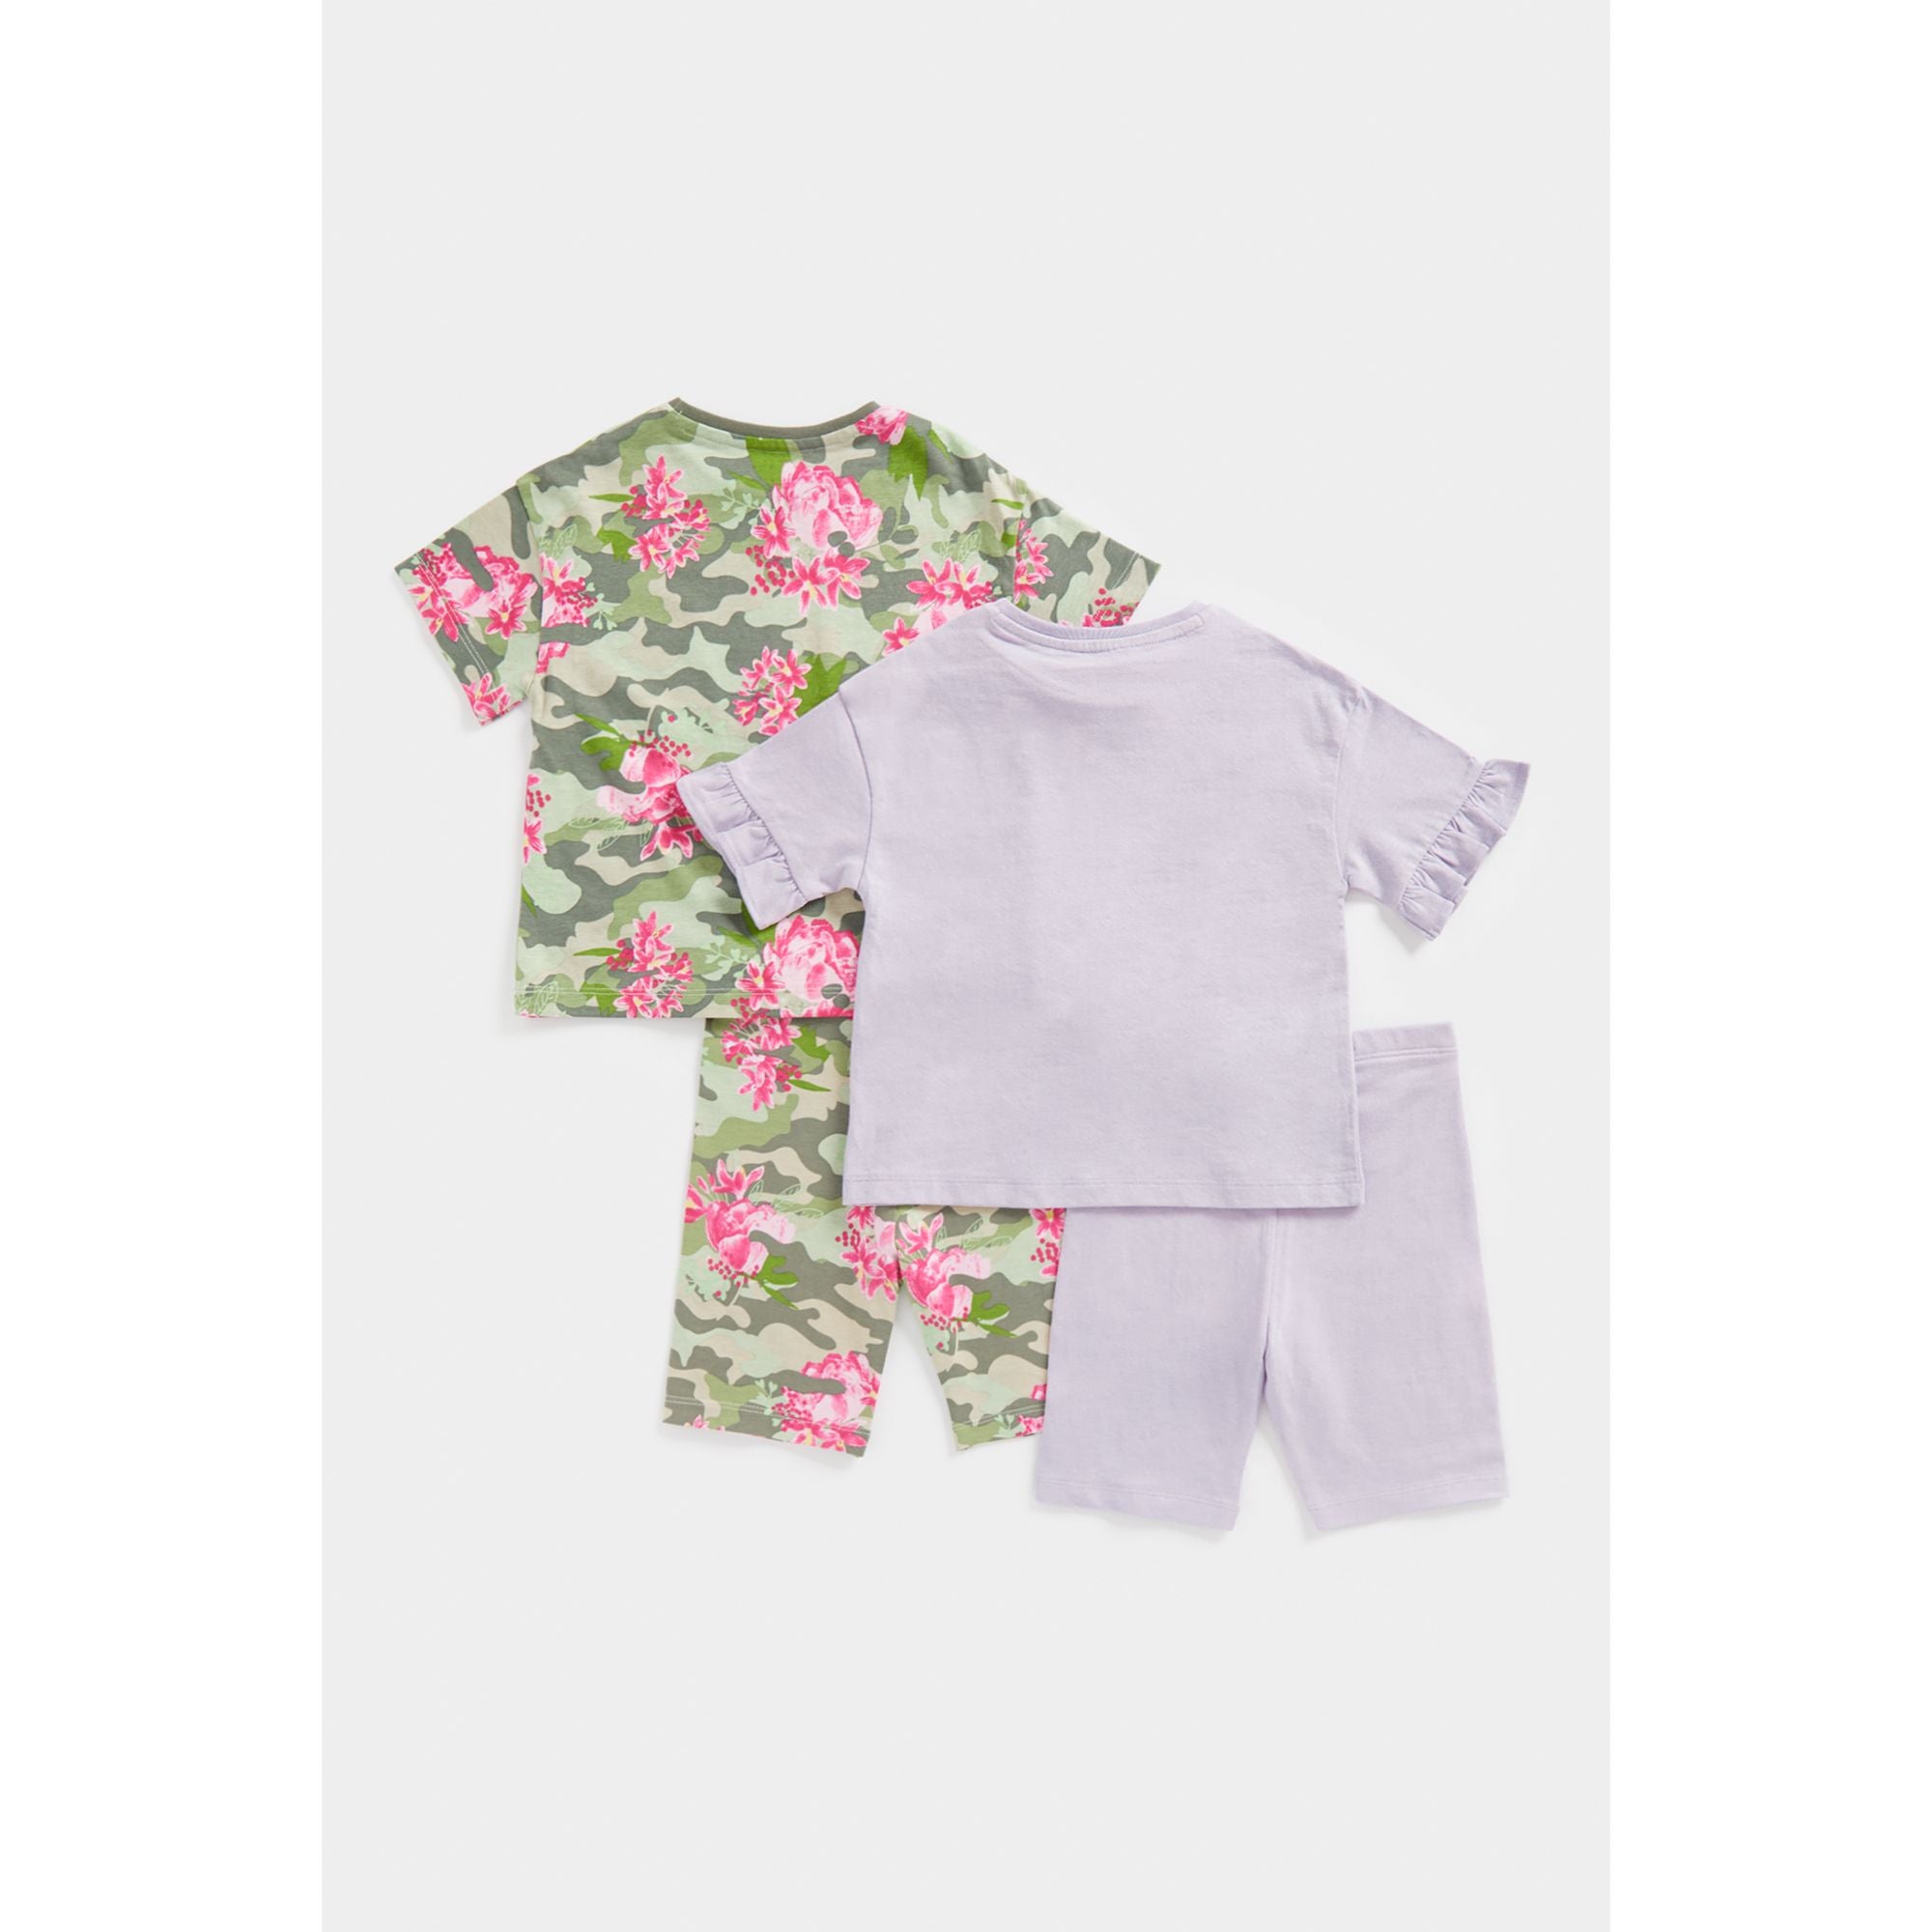 Mothercare Botanical T-Shirt and Short Sets